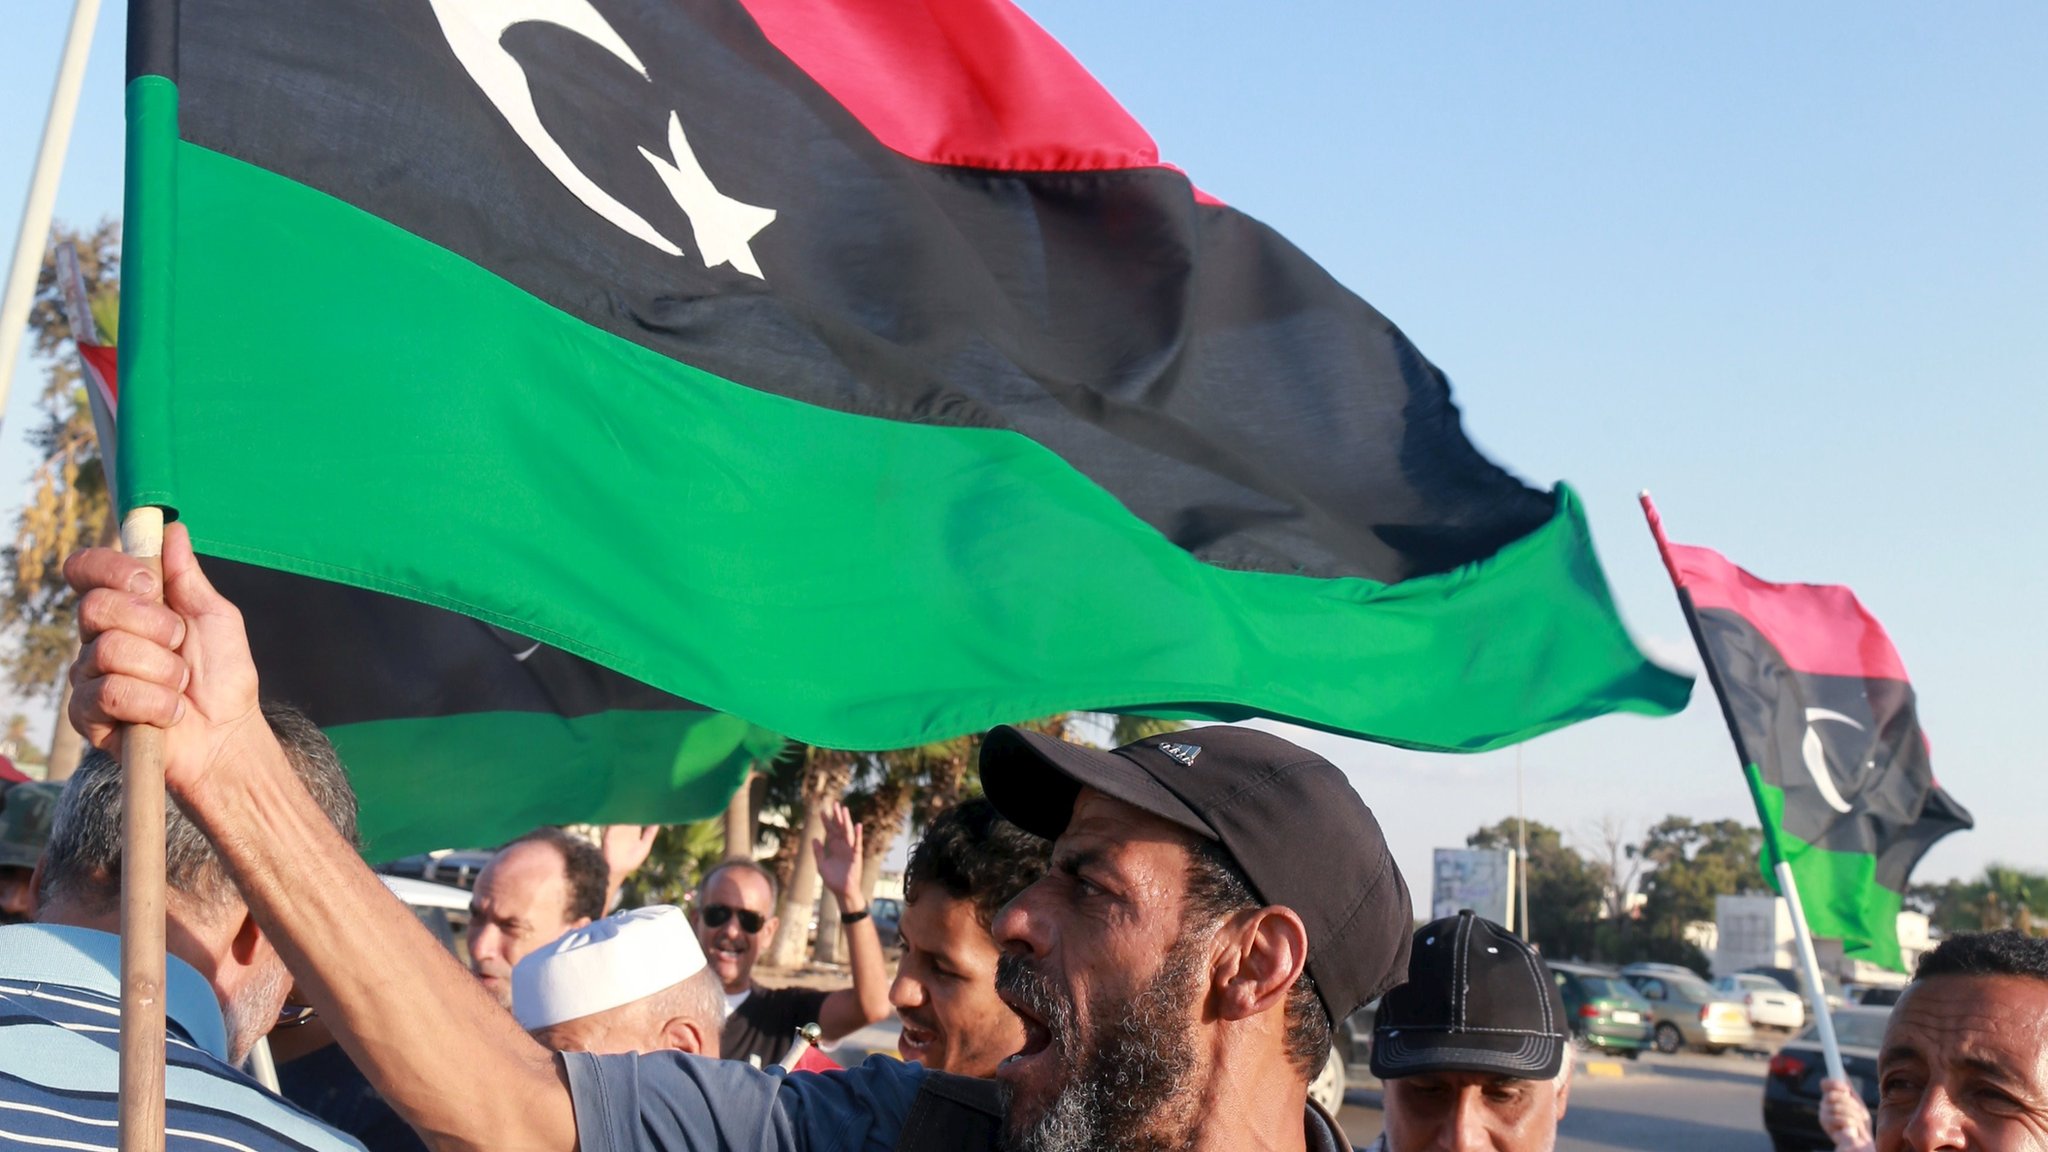 Libya Libyan Flag Children's Kids Childs T Shirt